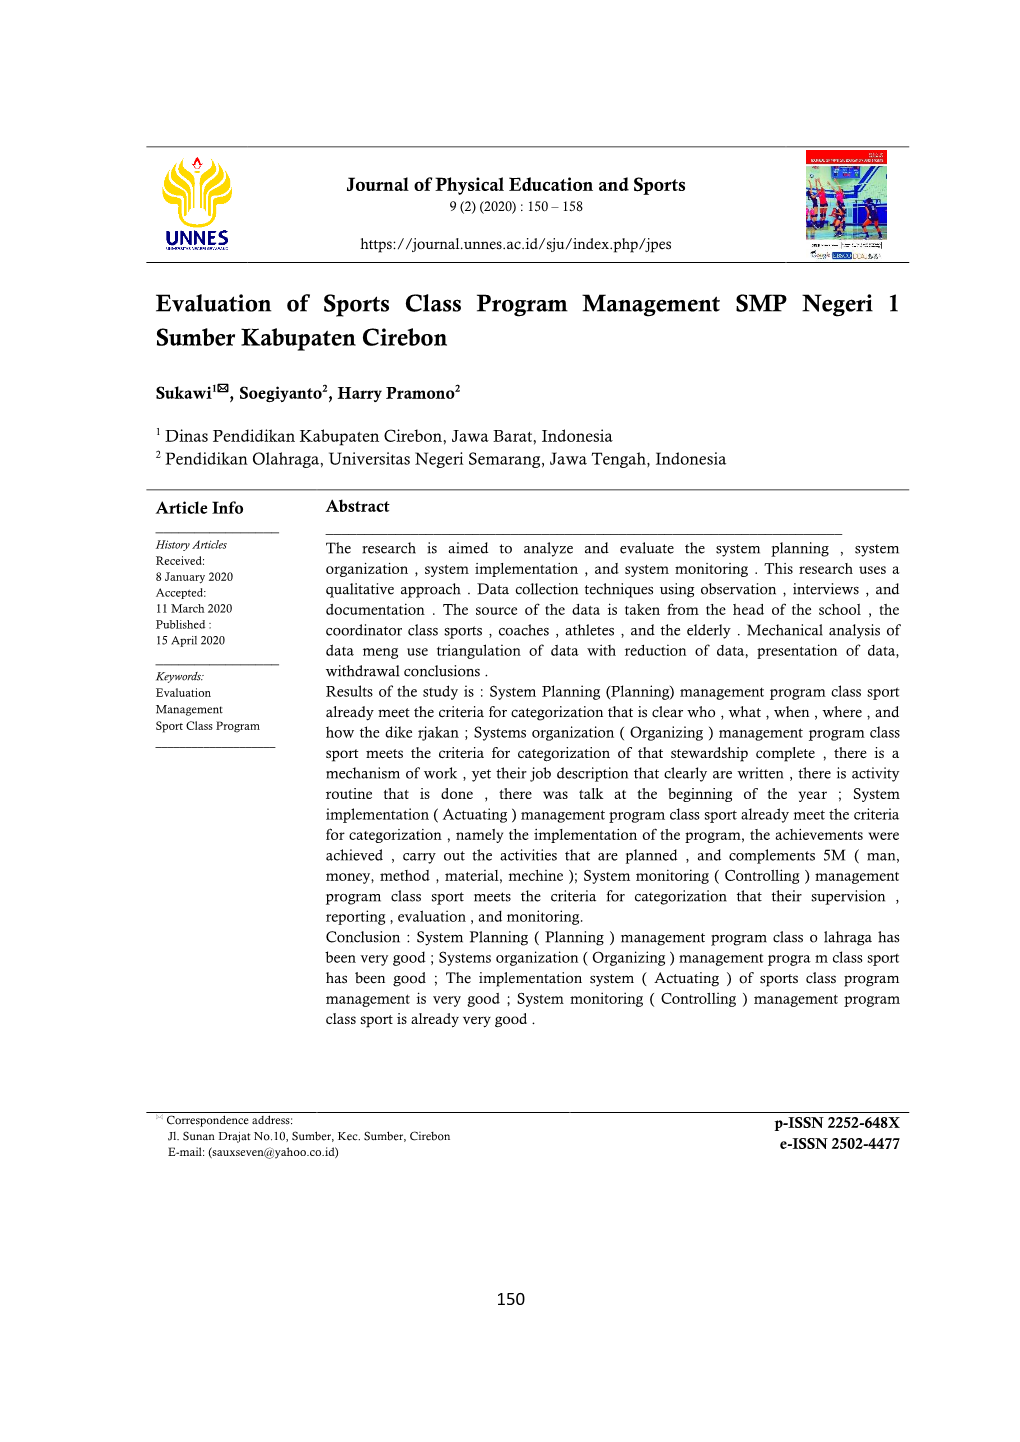 Evaluation of Sports Class Program Management SMP Negeri 1 Sumber Kabupaten Cirebon